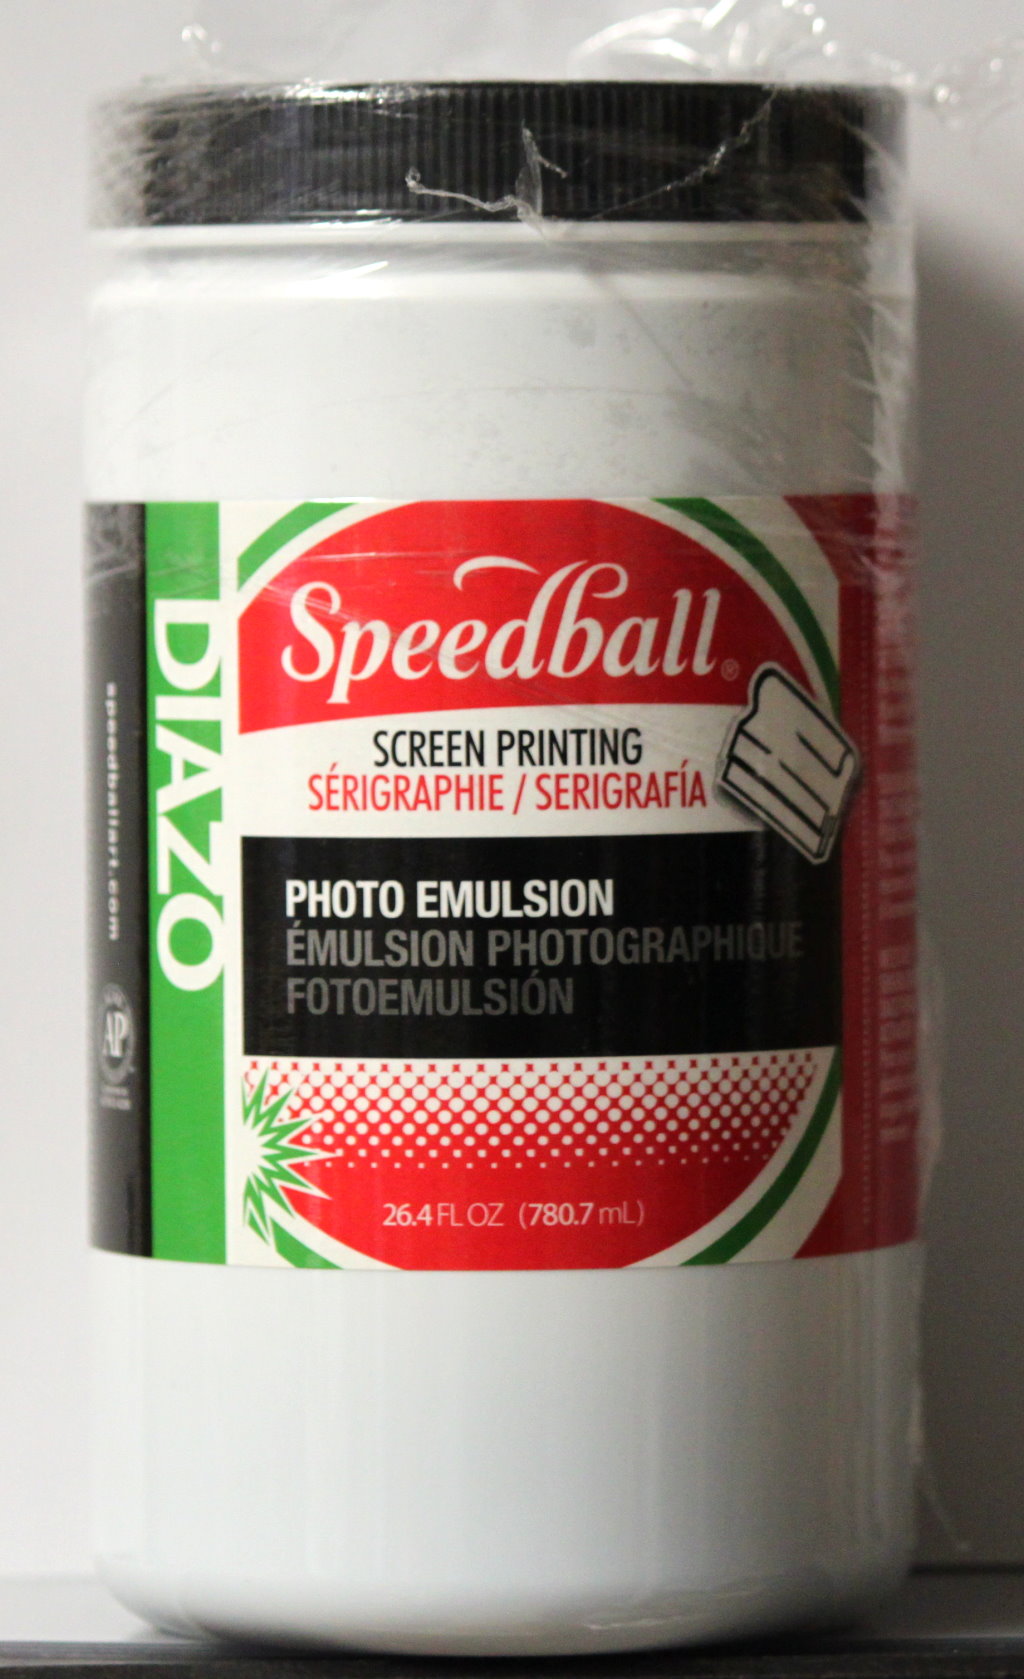 Speedball 26.4 oz. Diazo Photo Emulsion